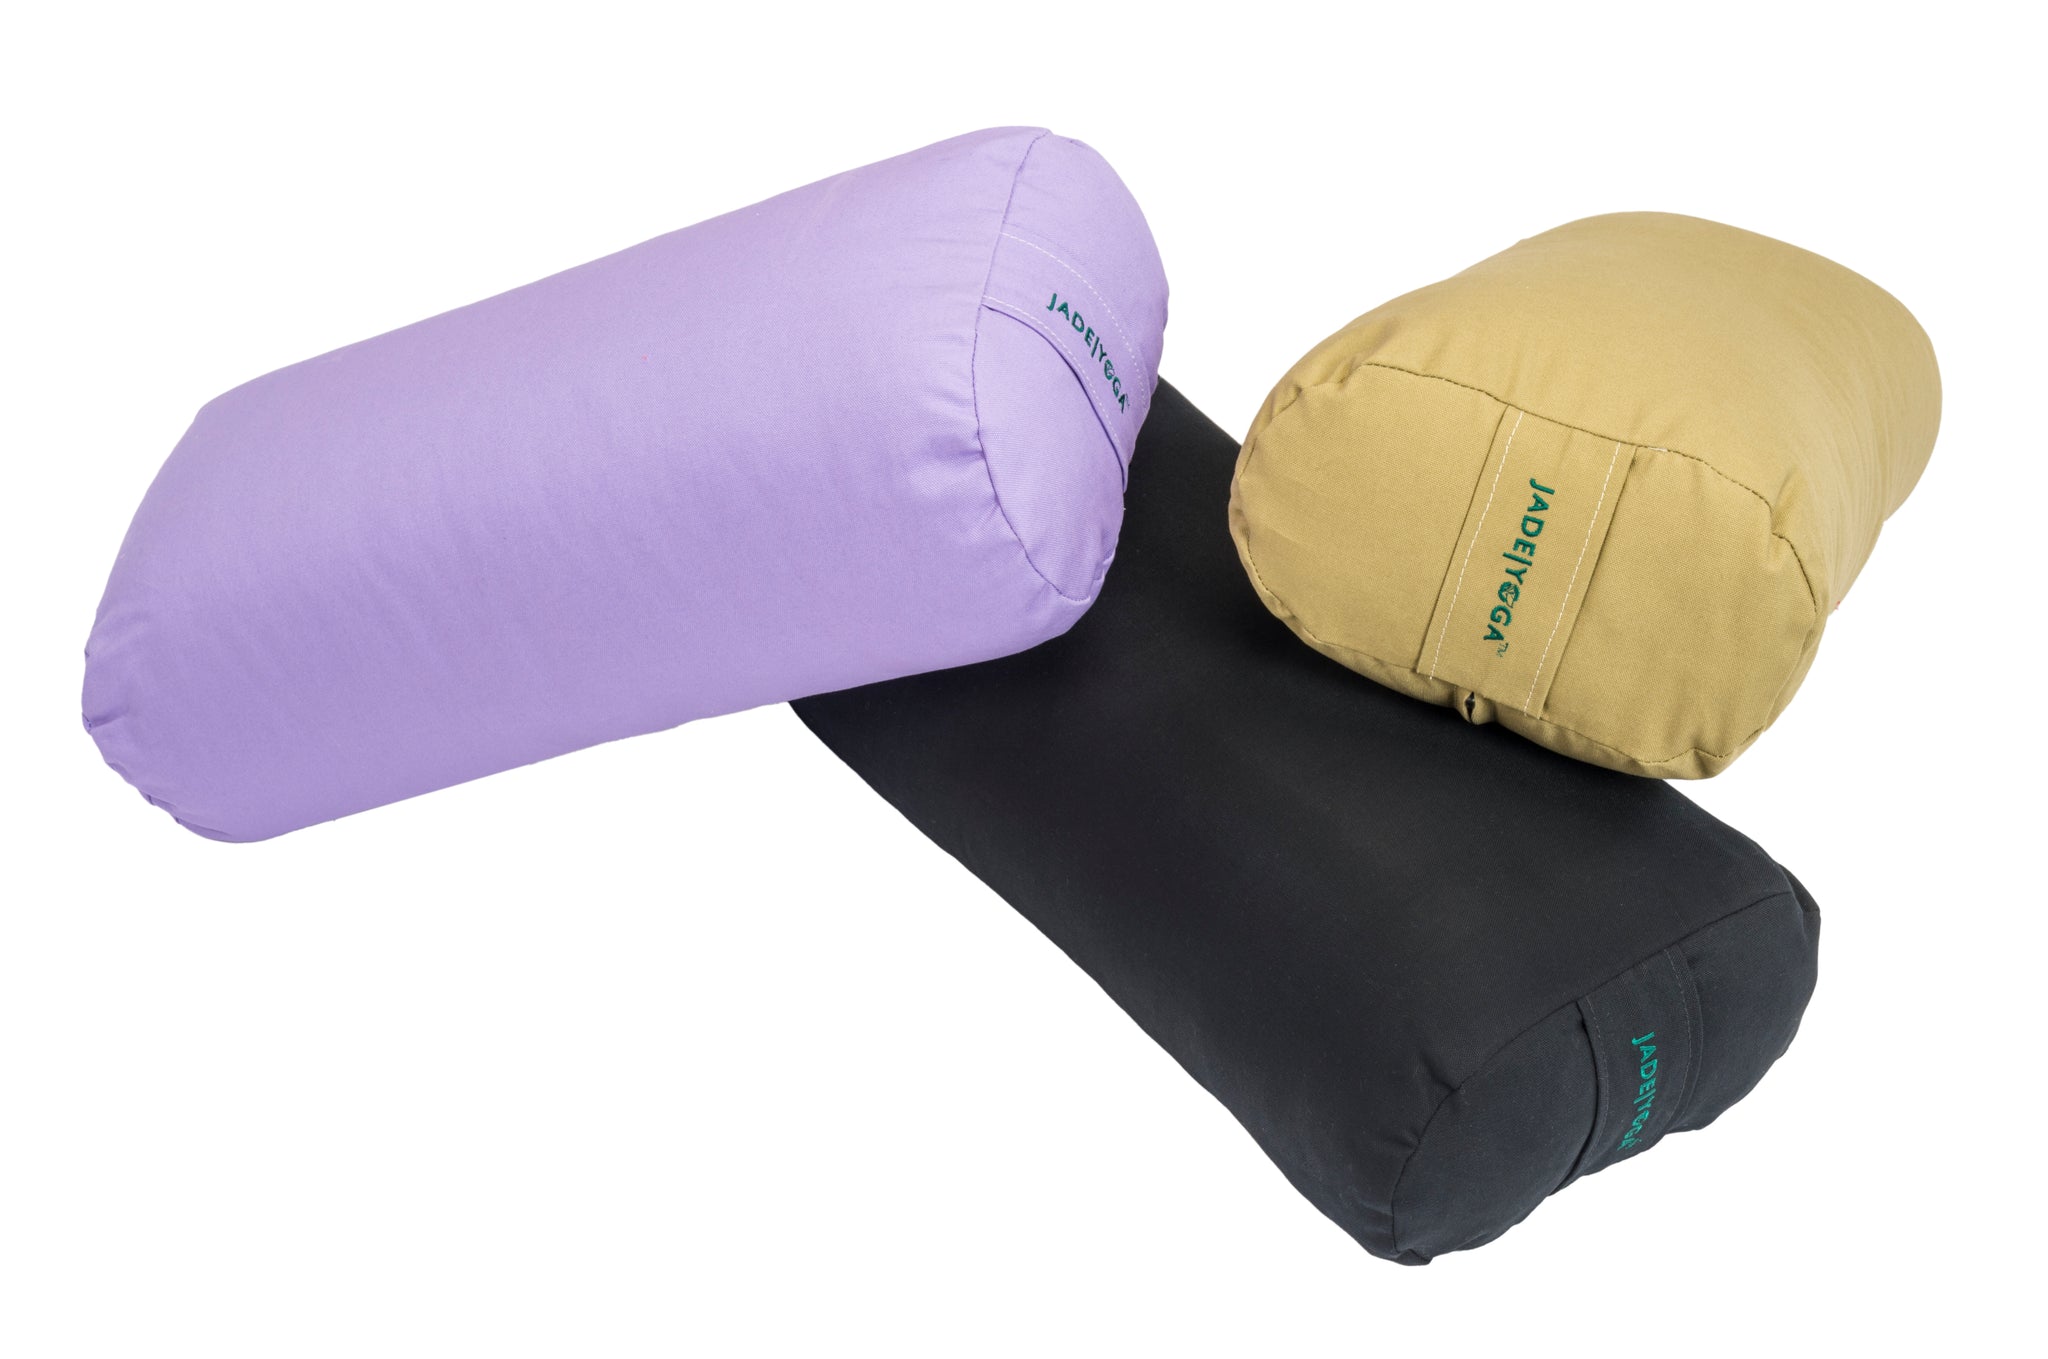  TokSay Yoga Bolster Pillow for Restorative Yoga